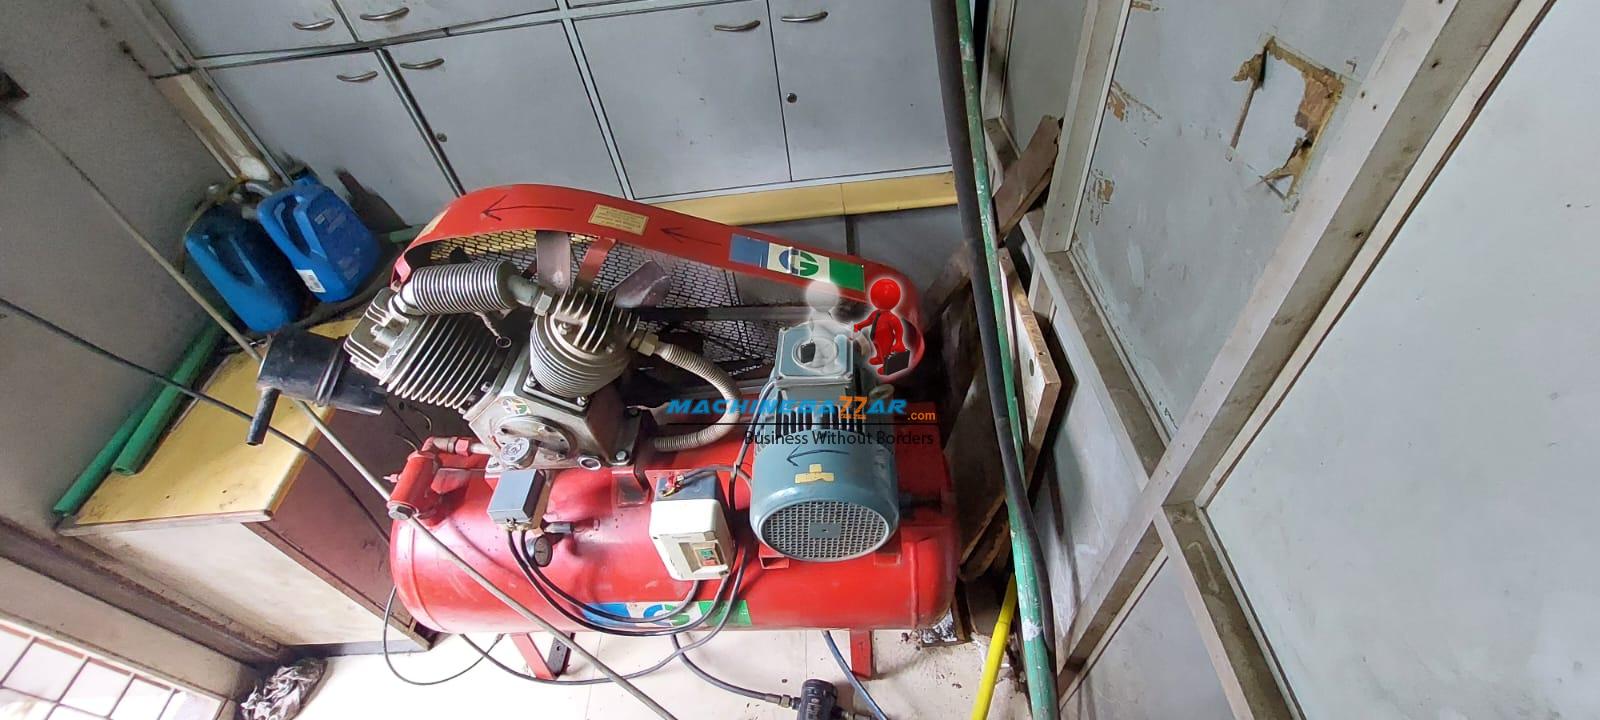 Reciprocating or piston compressors 